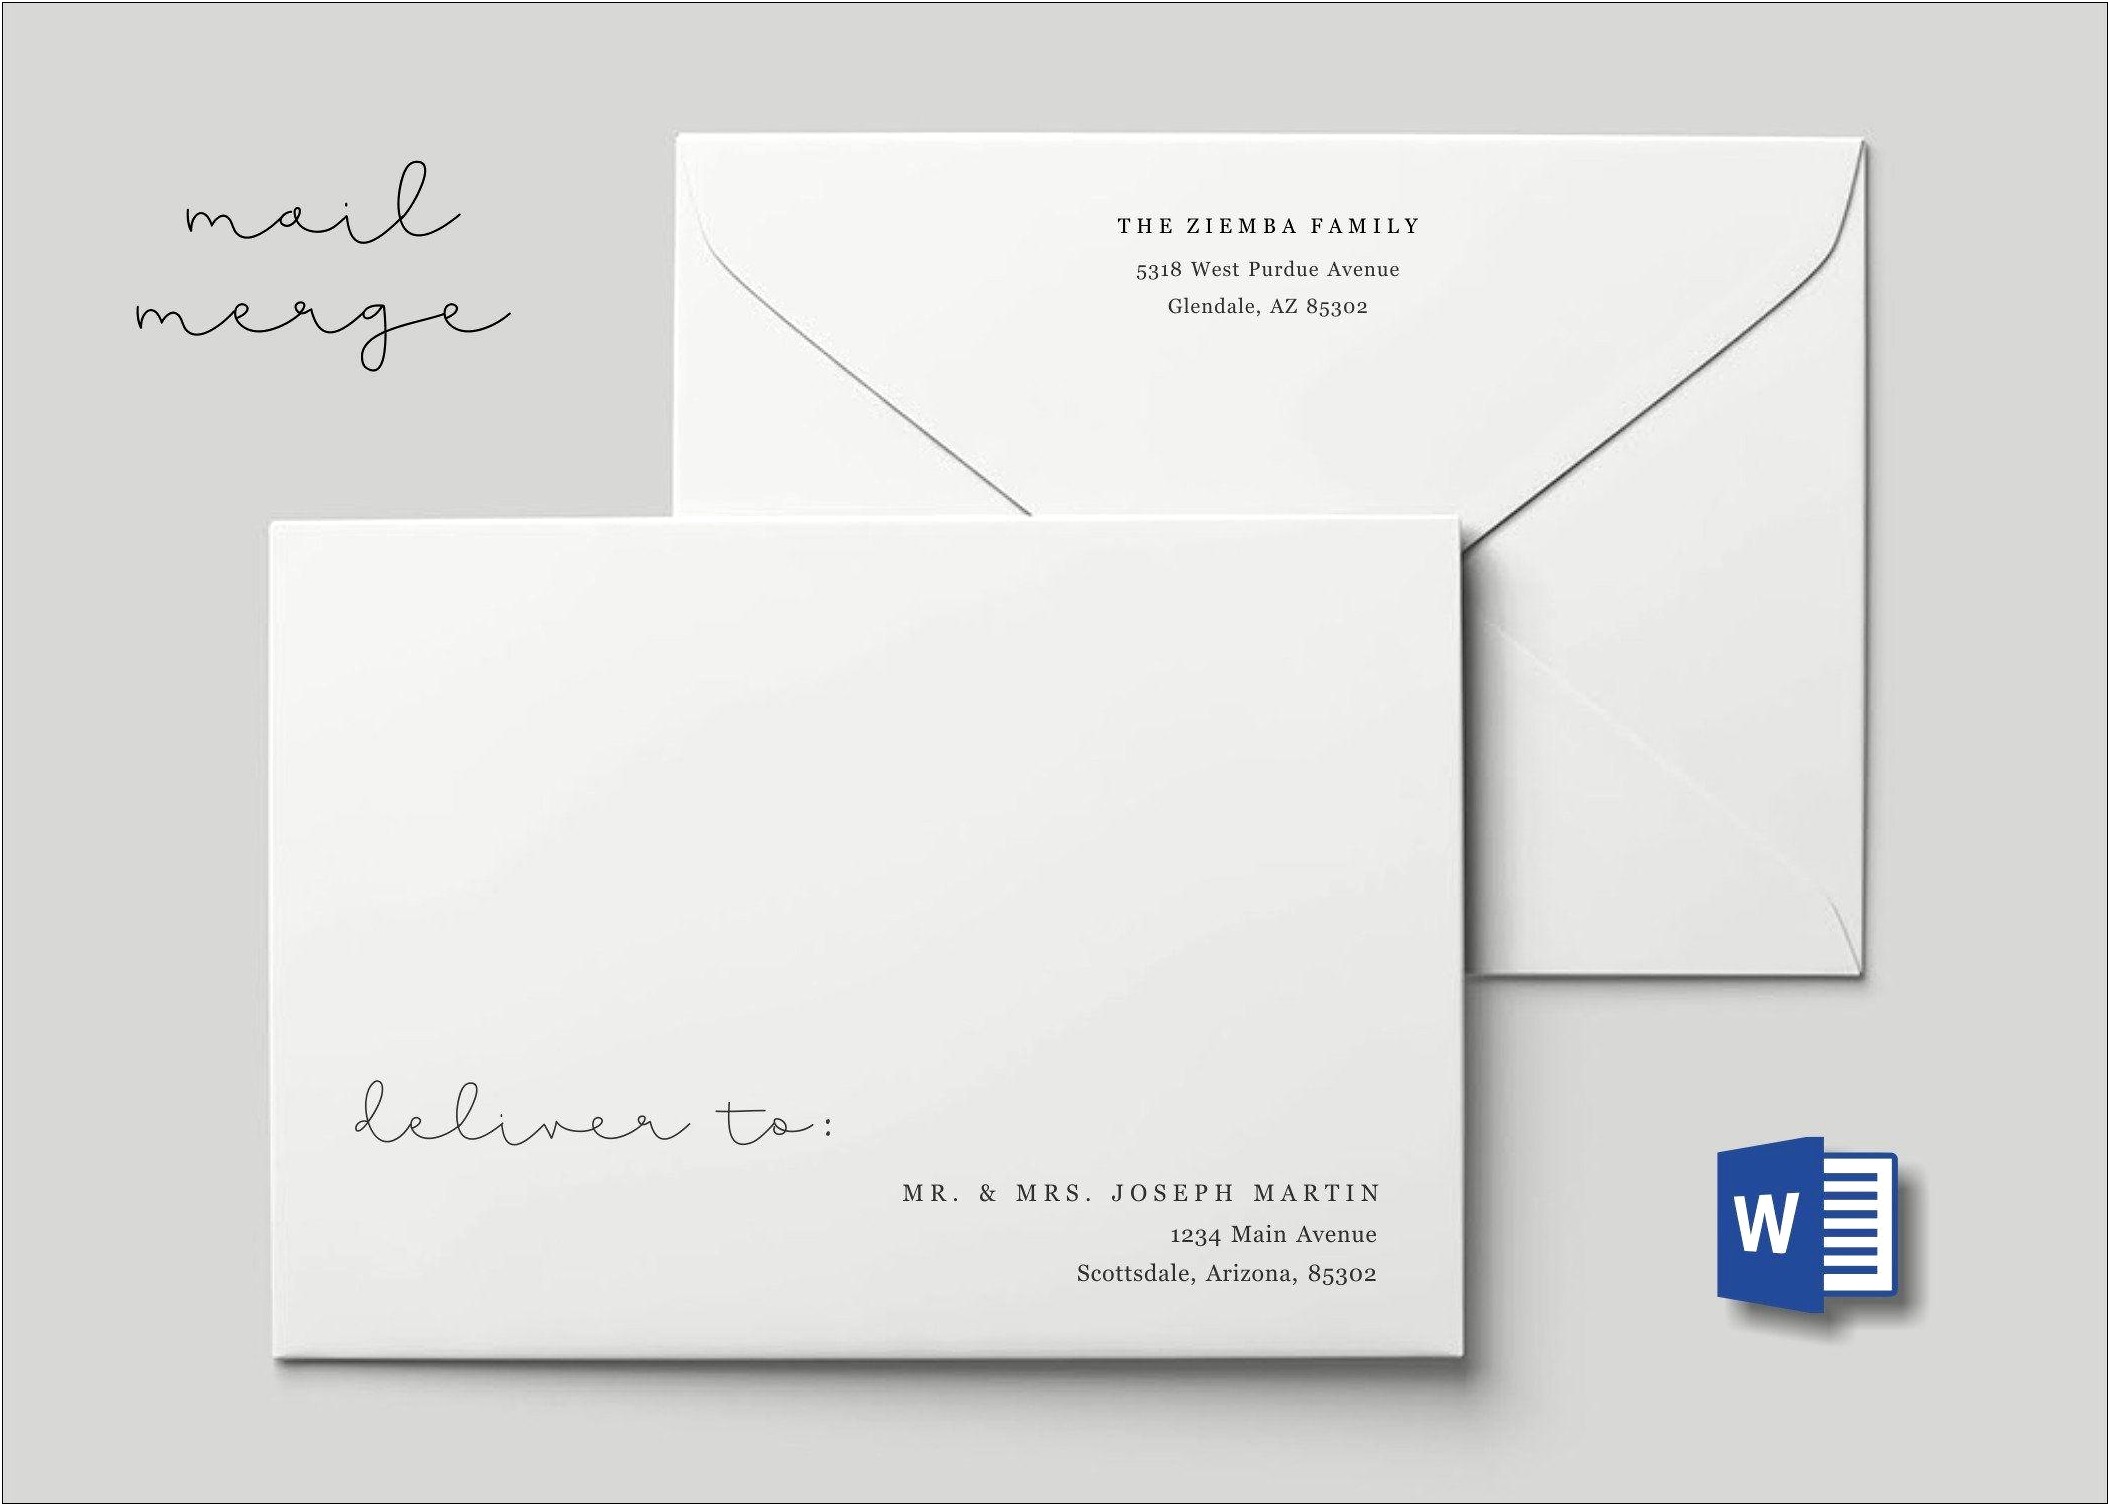 Microsoft Word Mail Merge Envelope Template